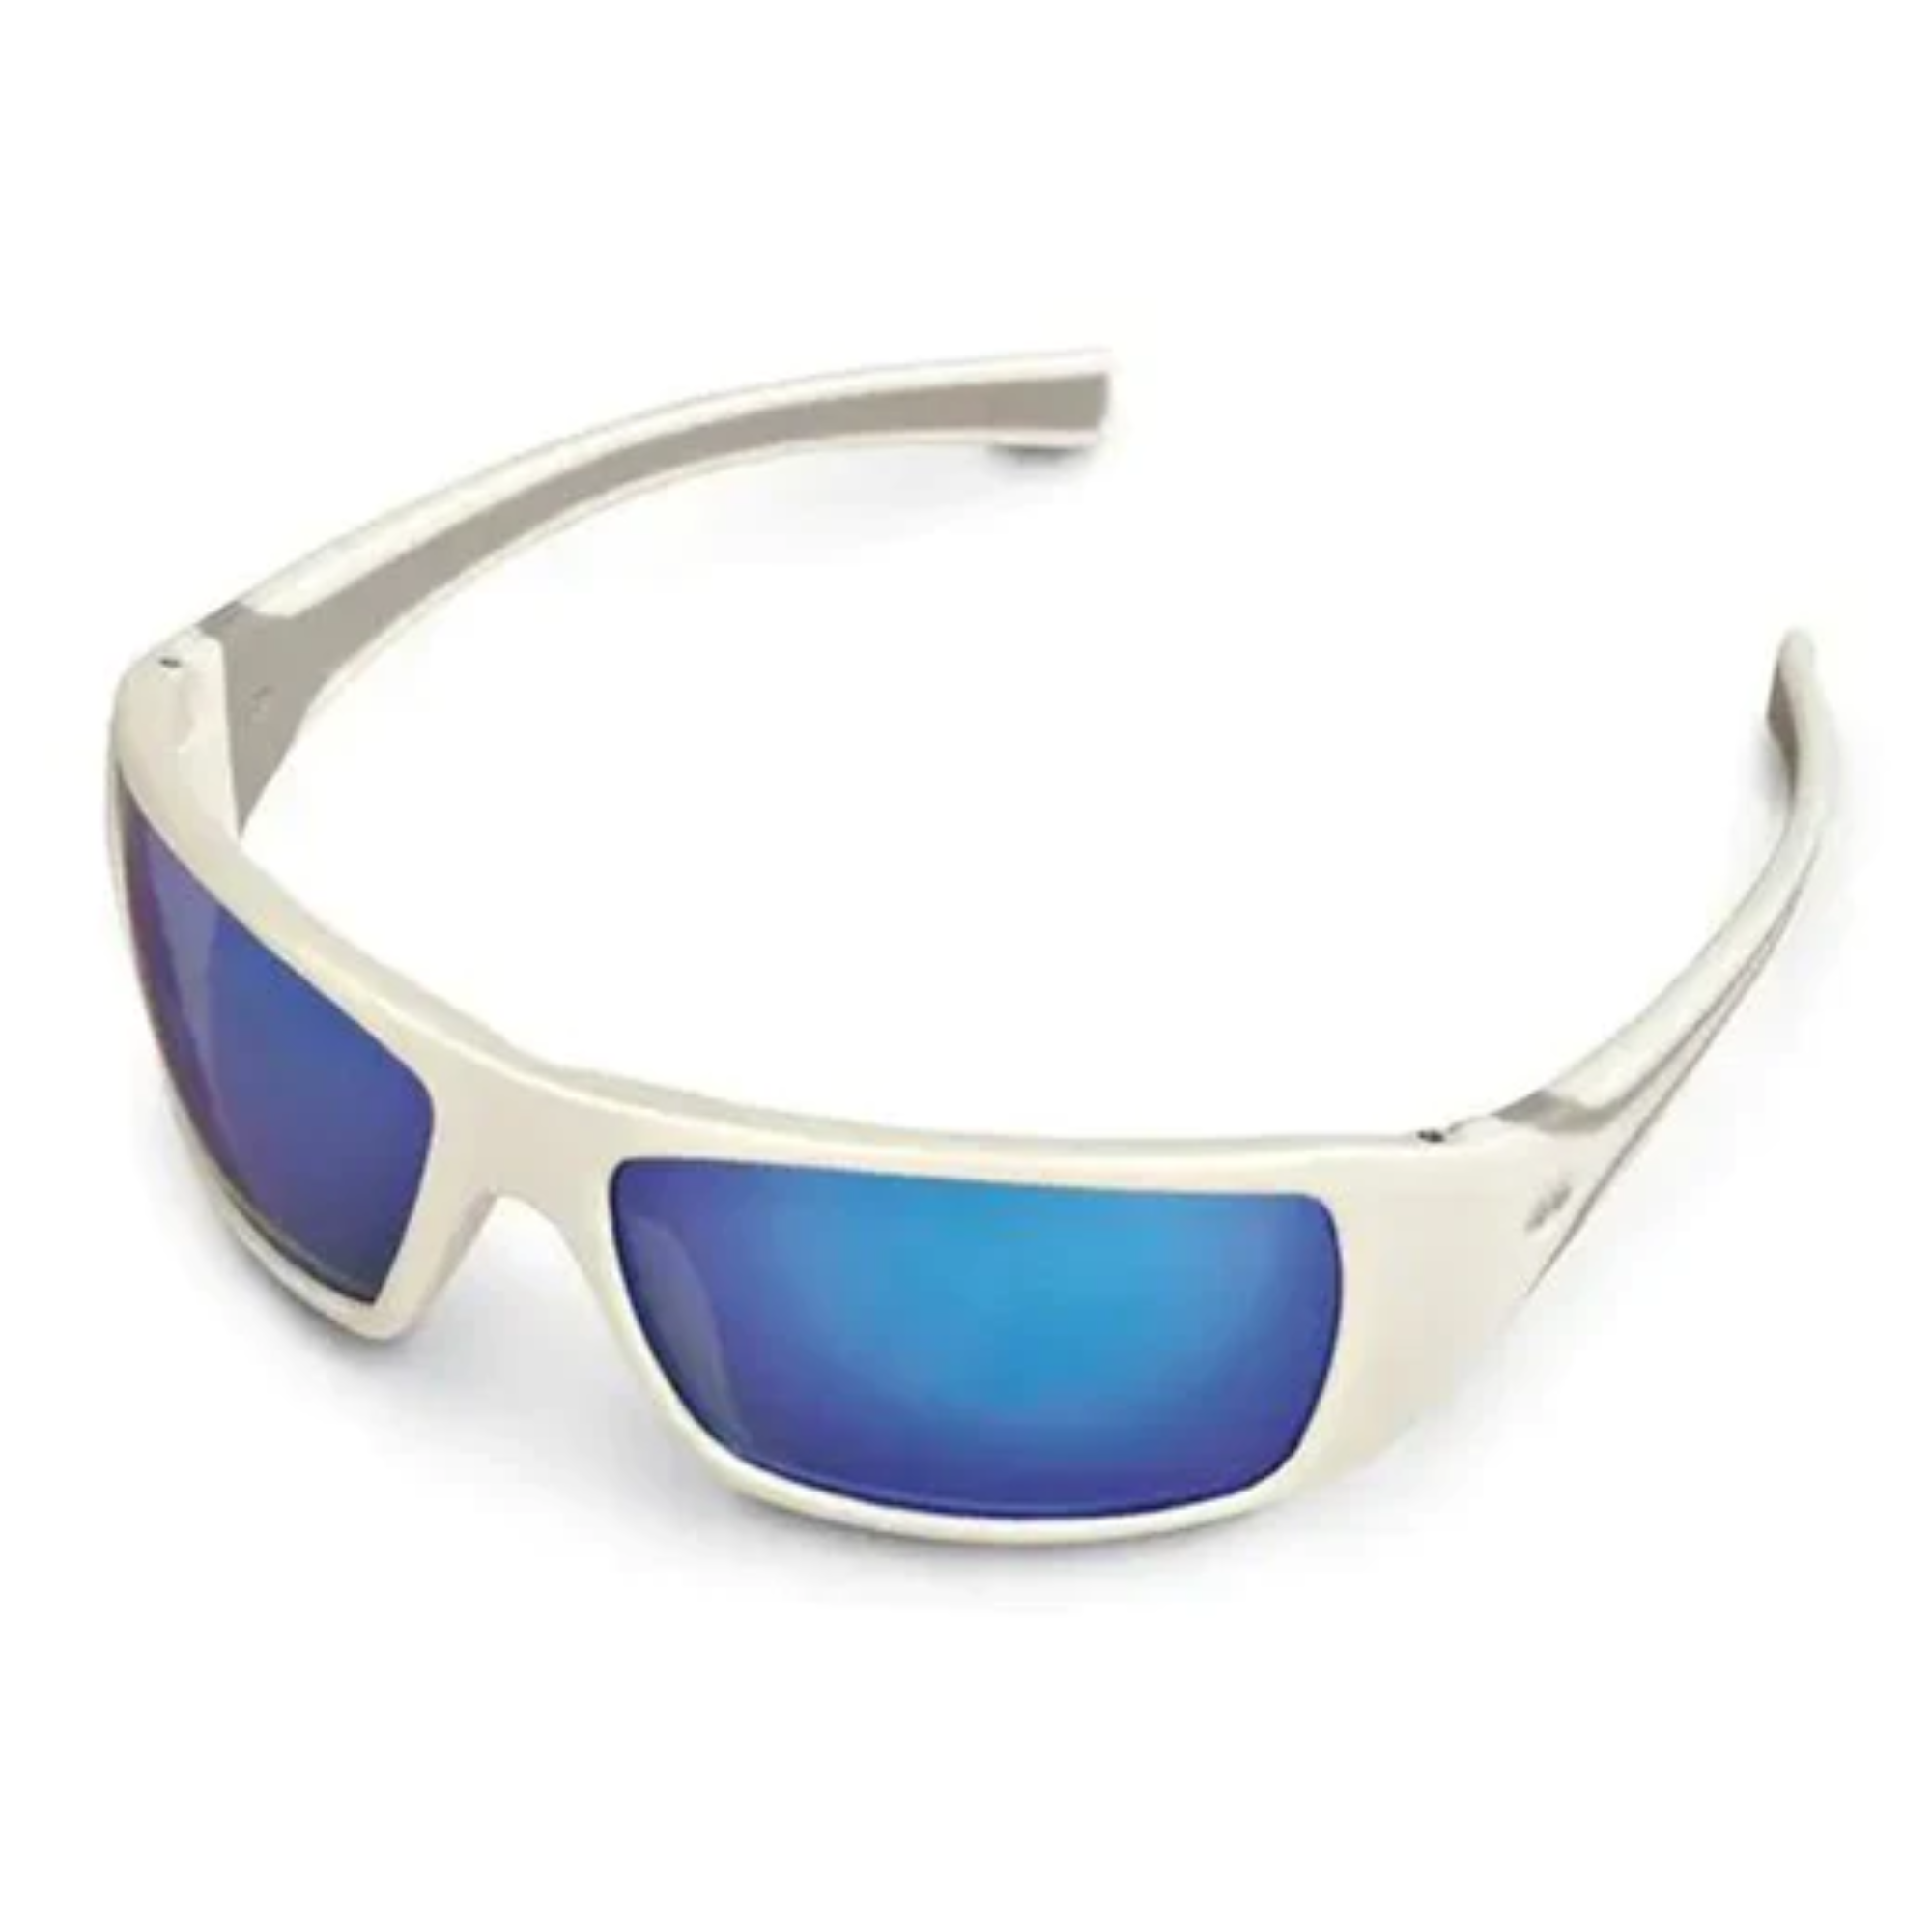 Stihl White Ice Silver Safety Glasses | 7010 884 0365